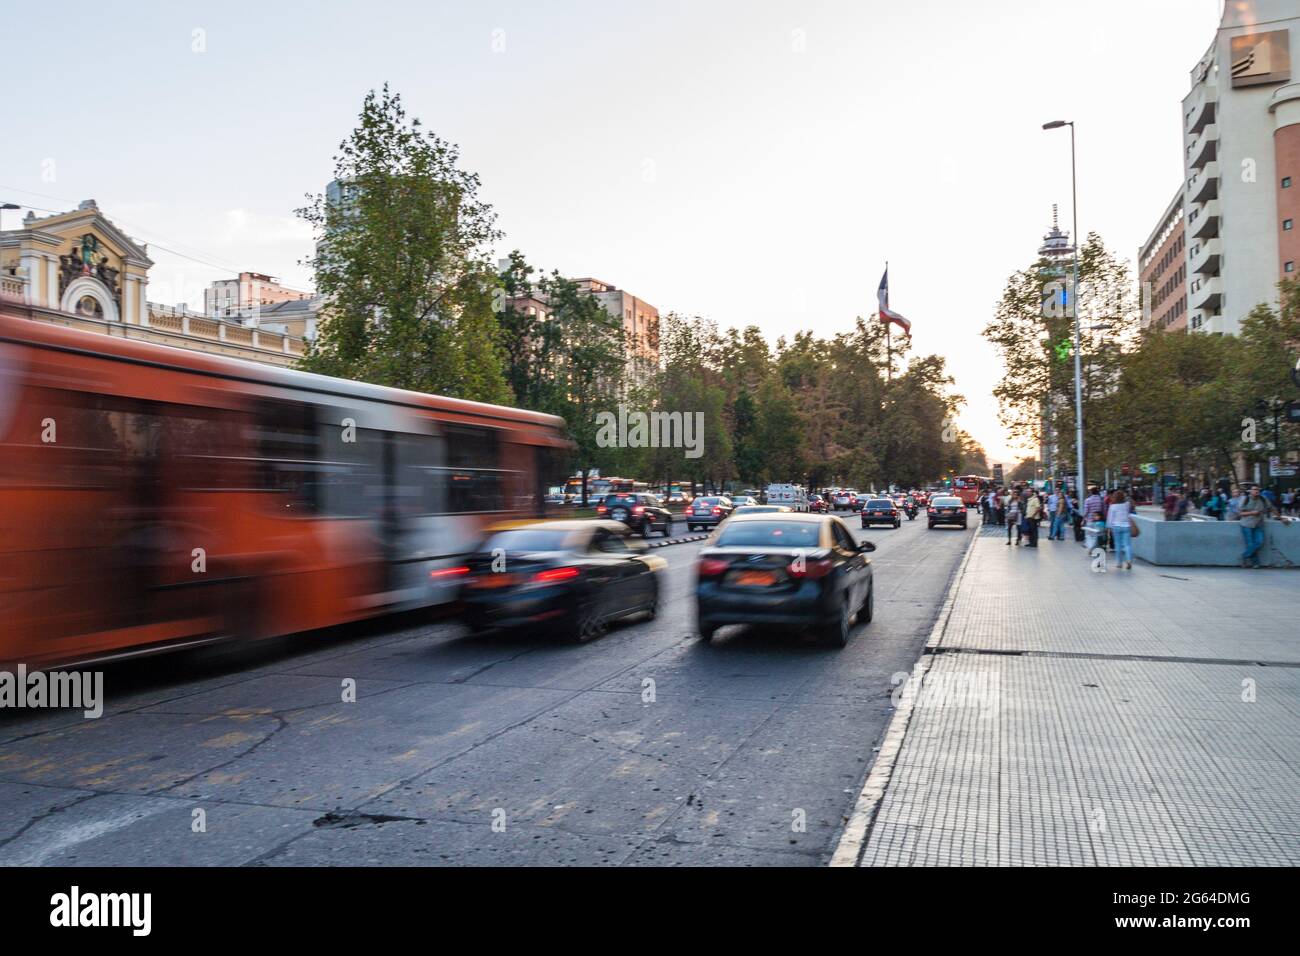 SANTIAGO, CHILE - MARCH 27, 2015: Traffic on Avenida Libertador Bernardo O'Higgins avenue in Santiago, Chile Stock Photo